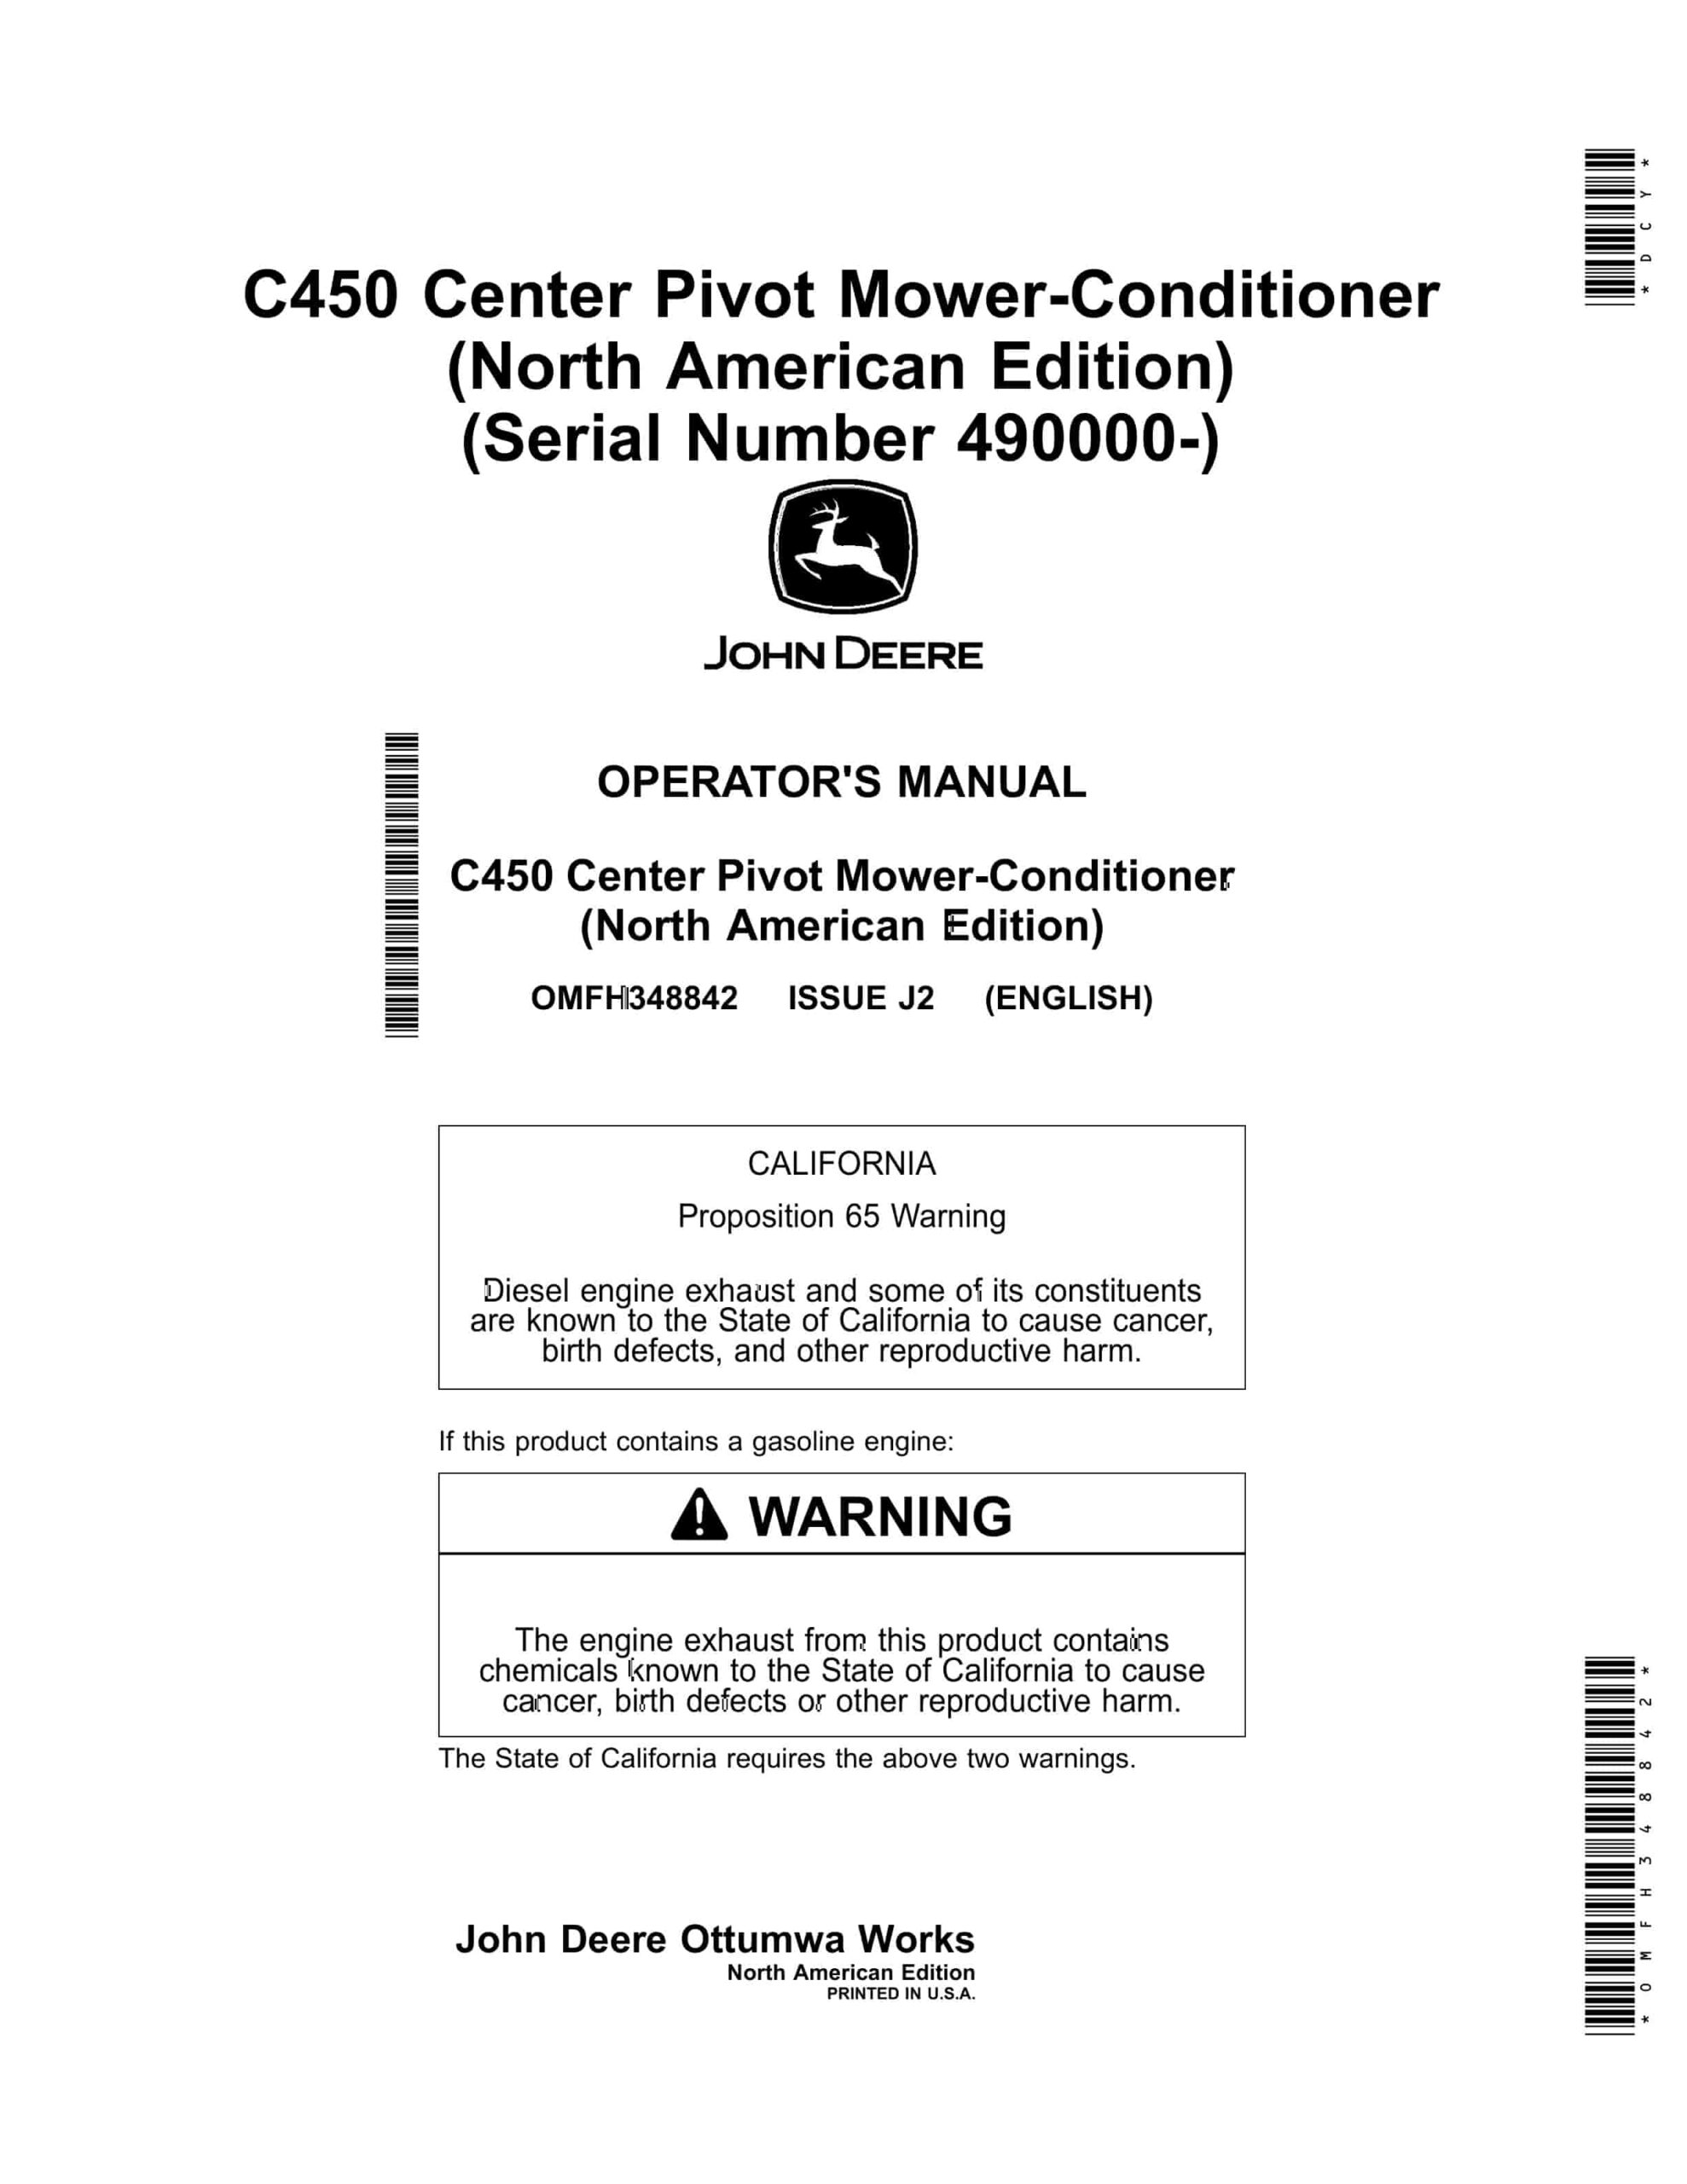 John Deere C450 Center Pivot Mower-Conditioner Operator Manual OMFH348842-1